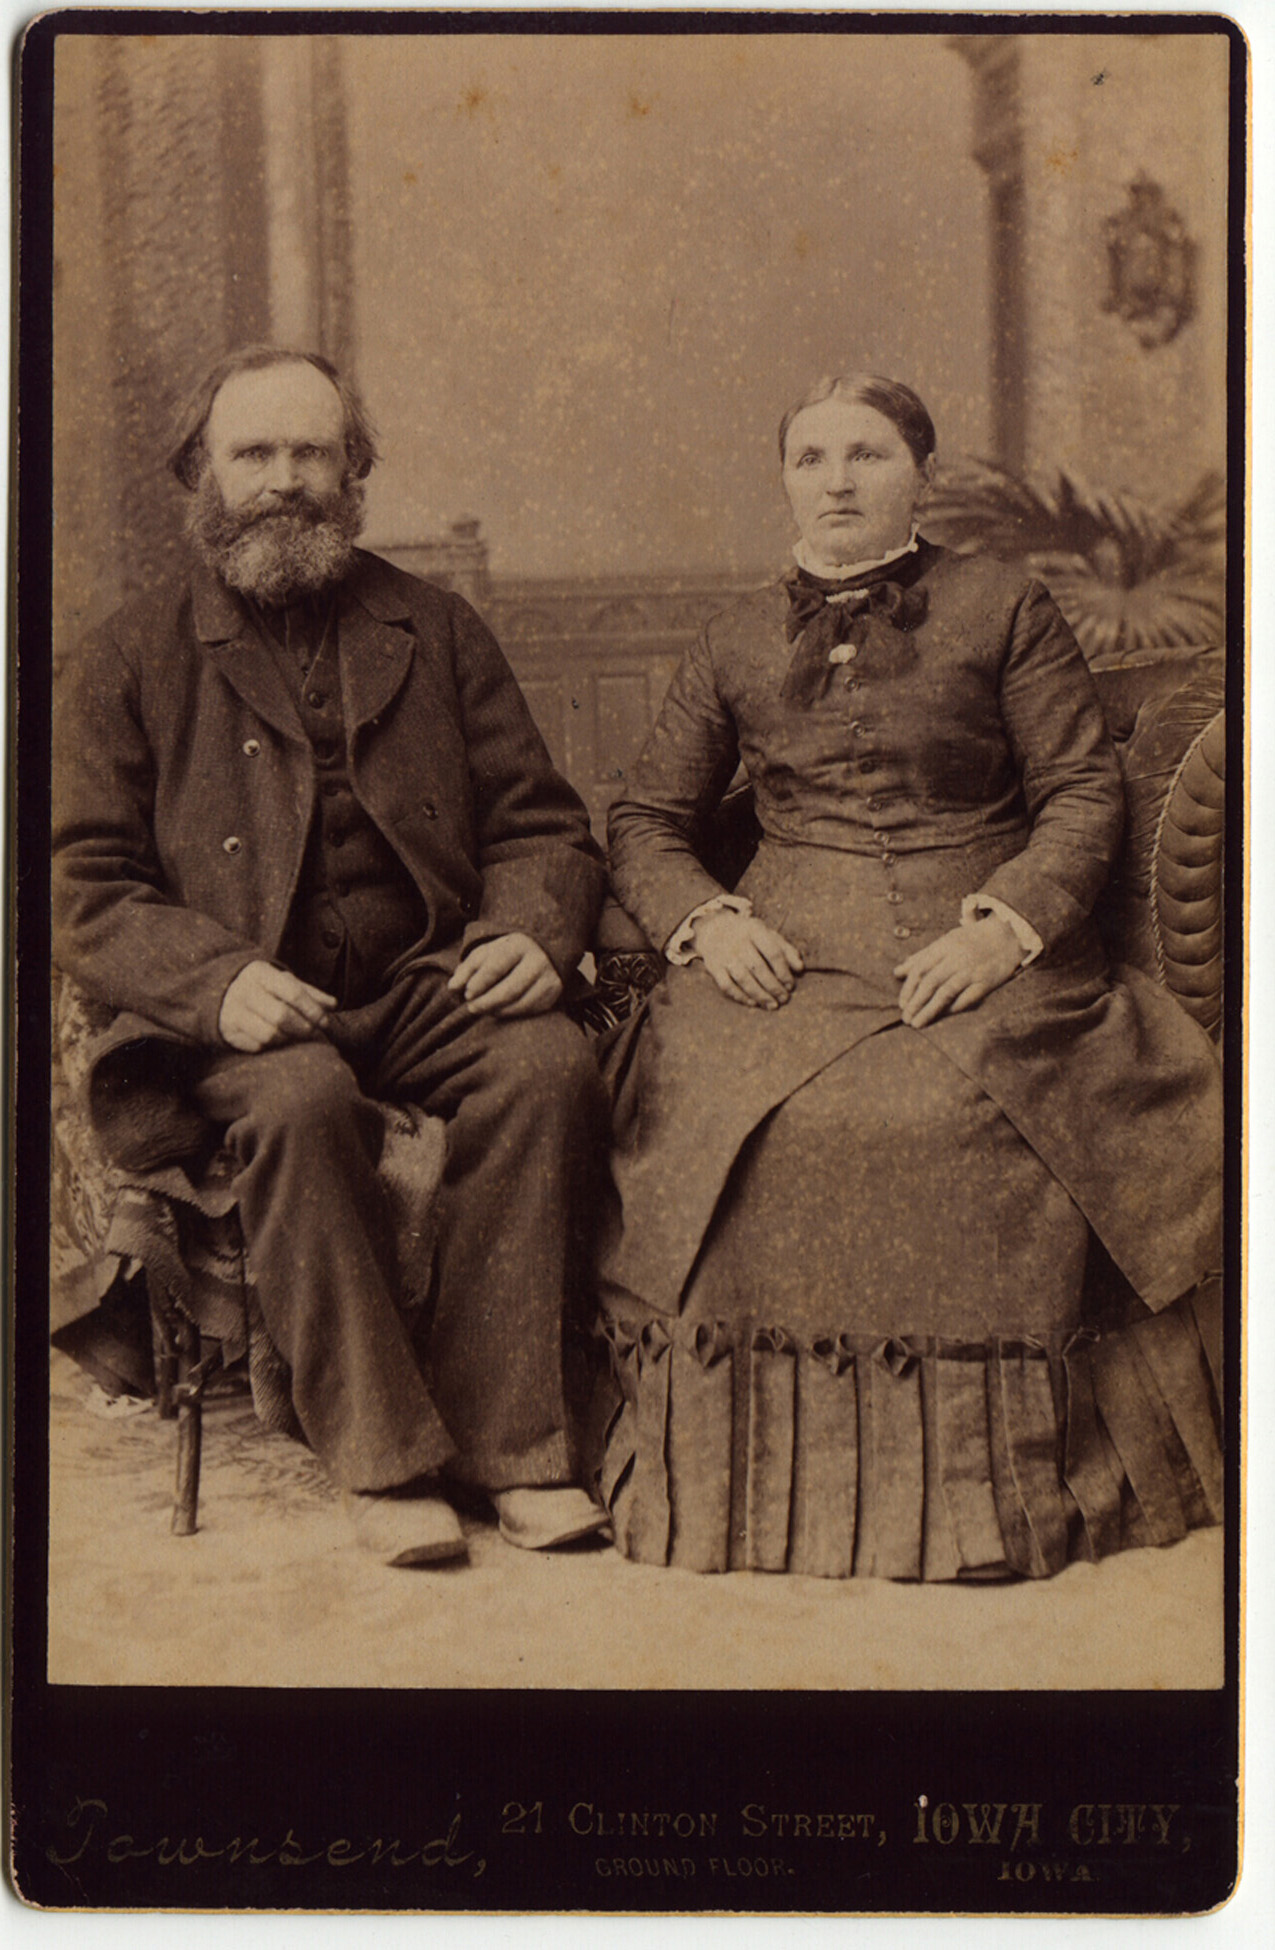 Augustus & Fredeericka Buck circa 1880